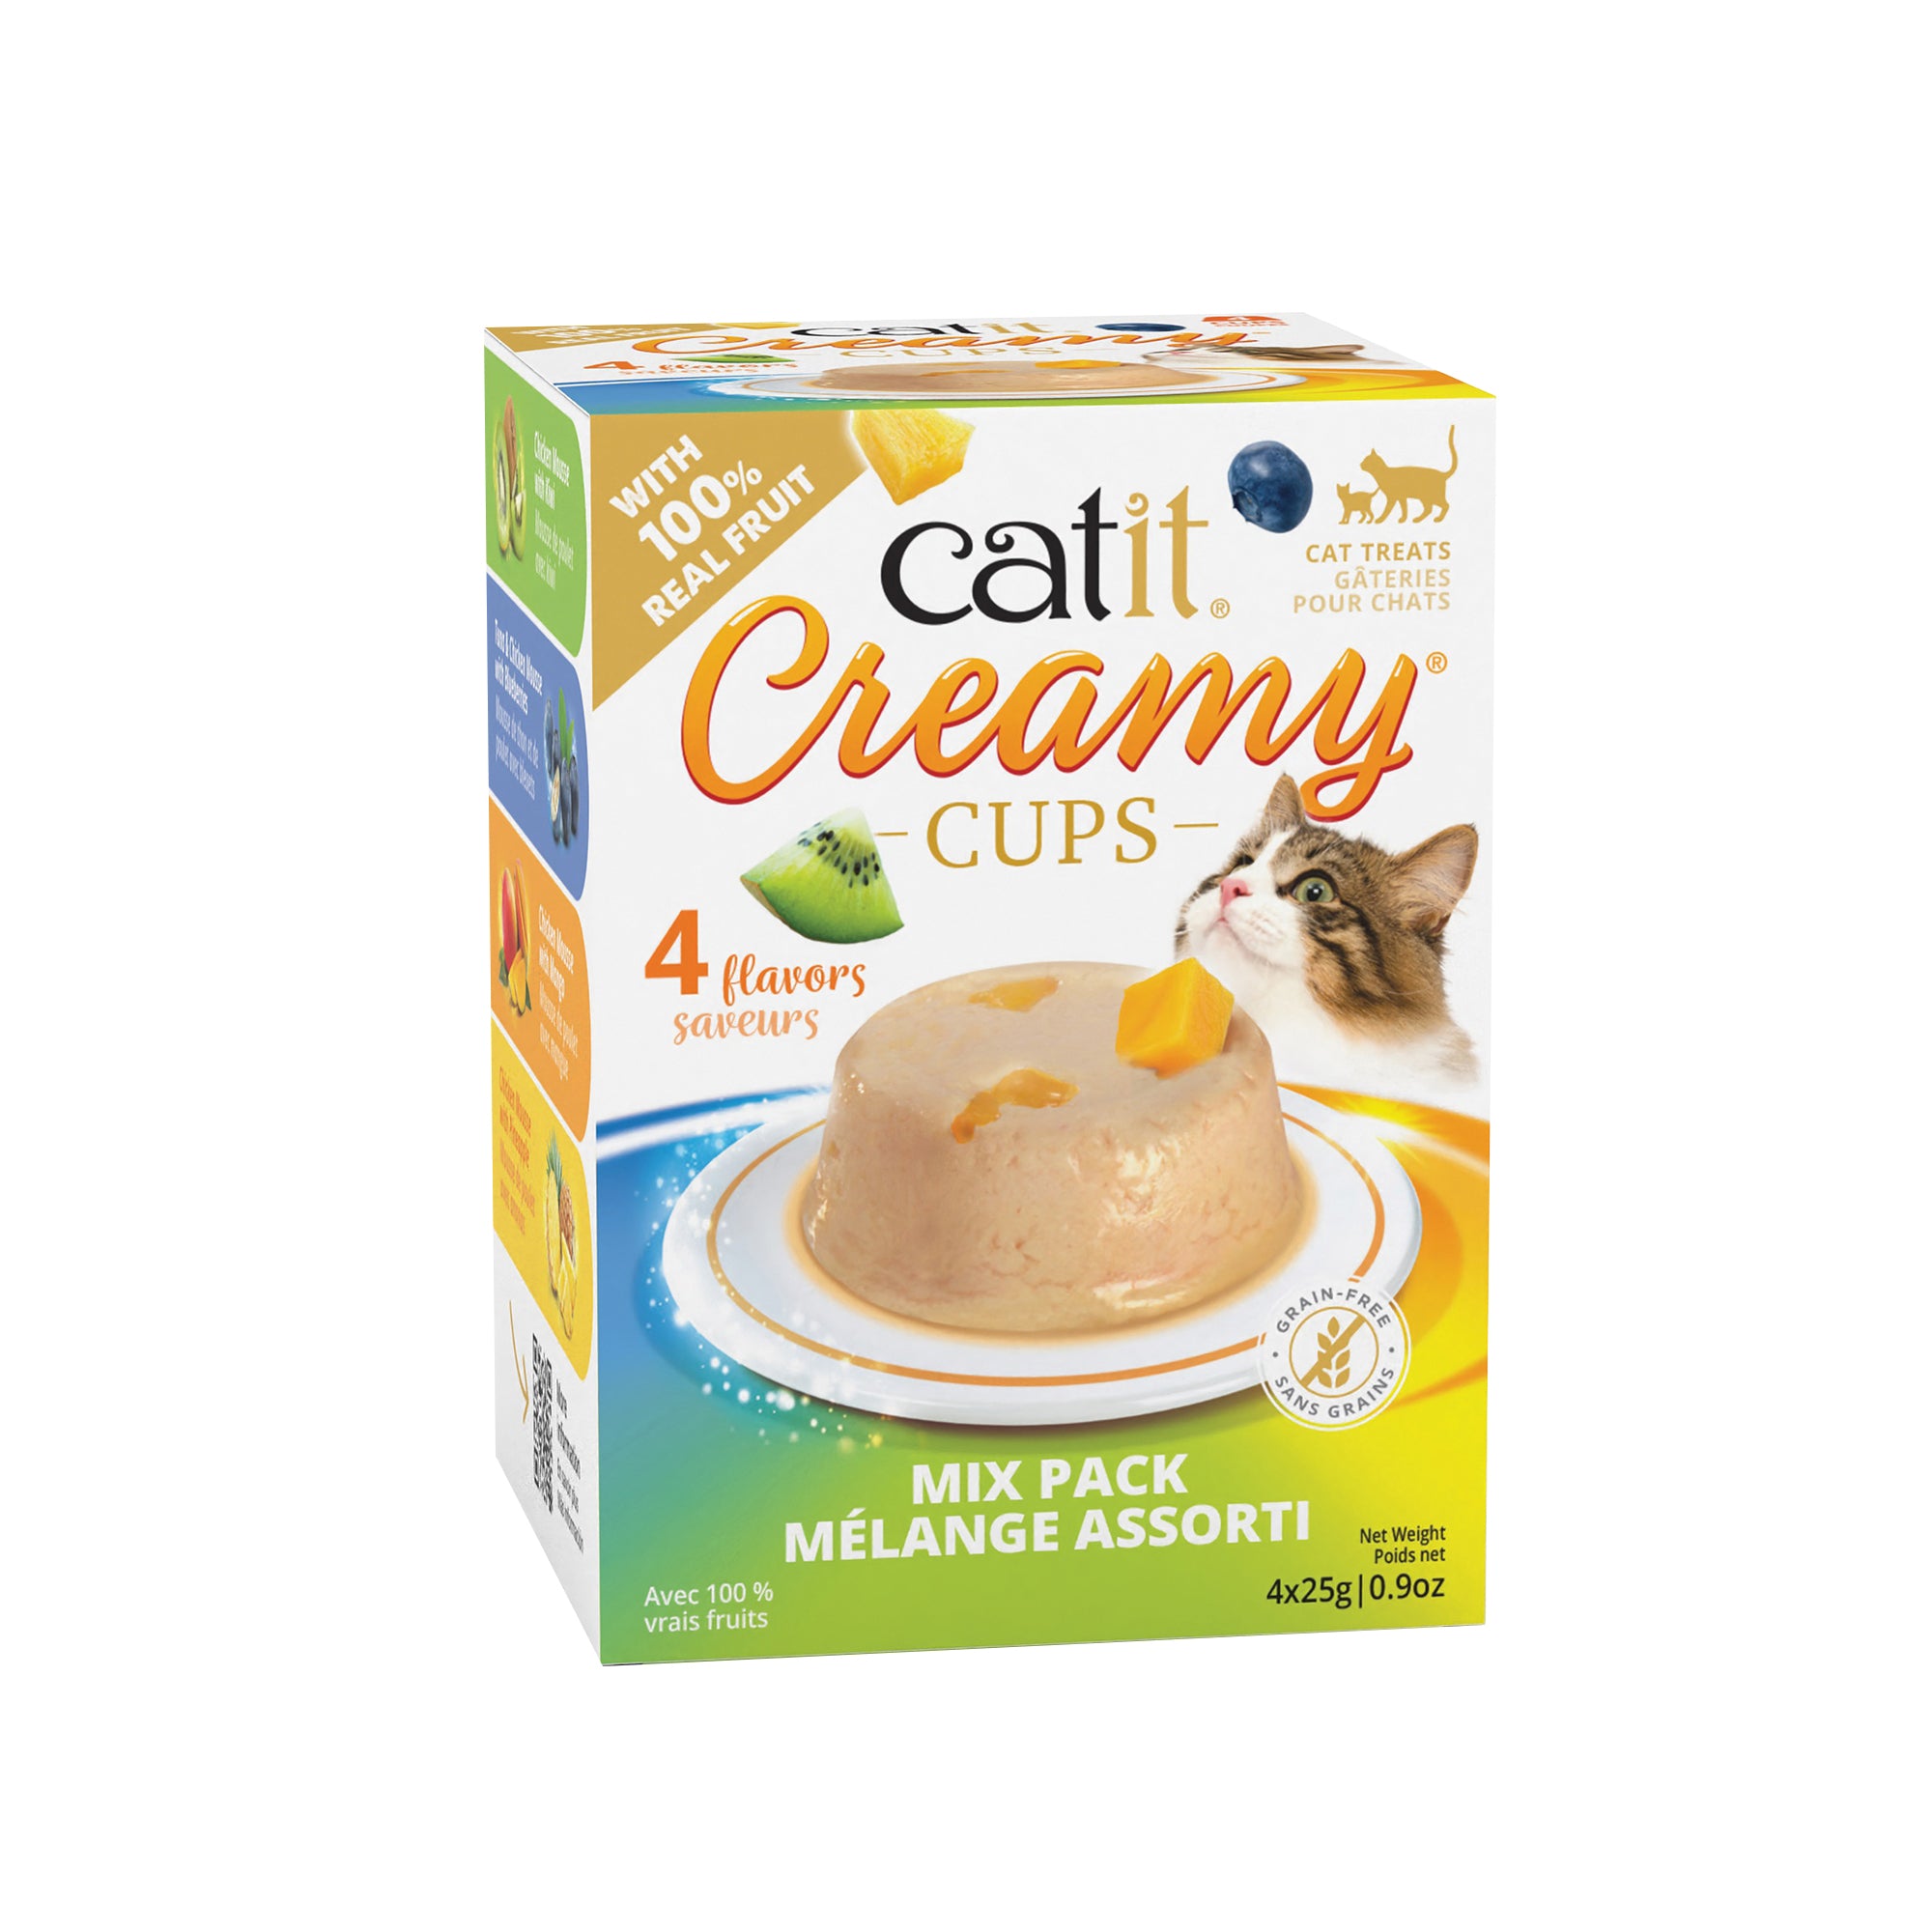 Mousse Catit Creamy Cups, Assortiment, 4 x 25 g